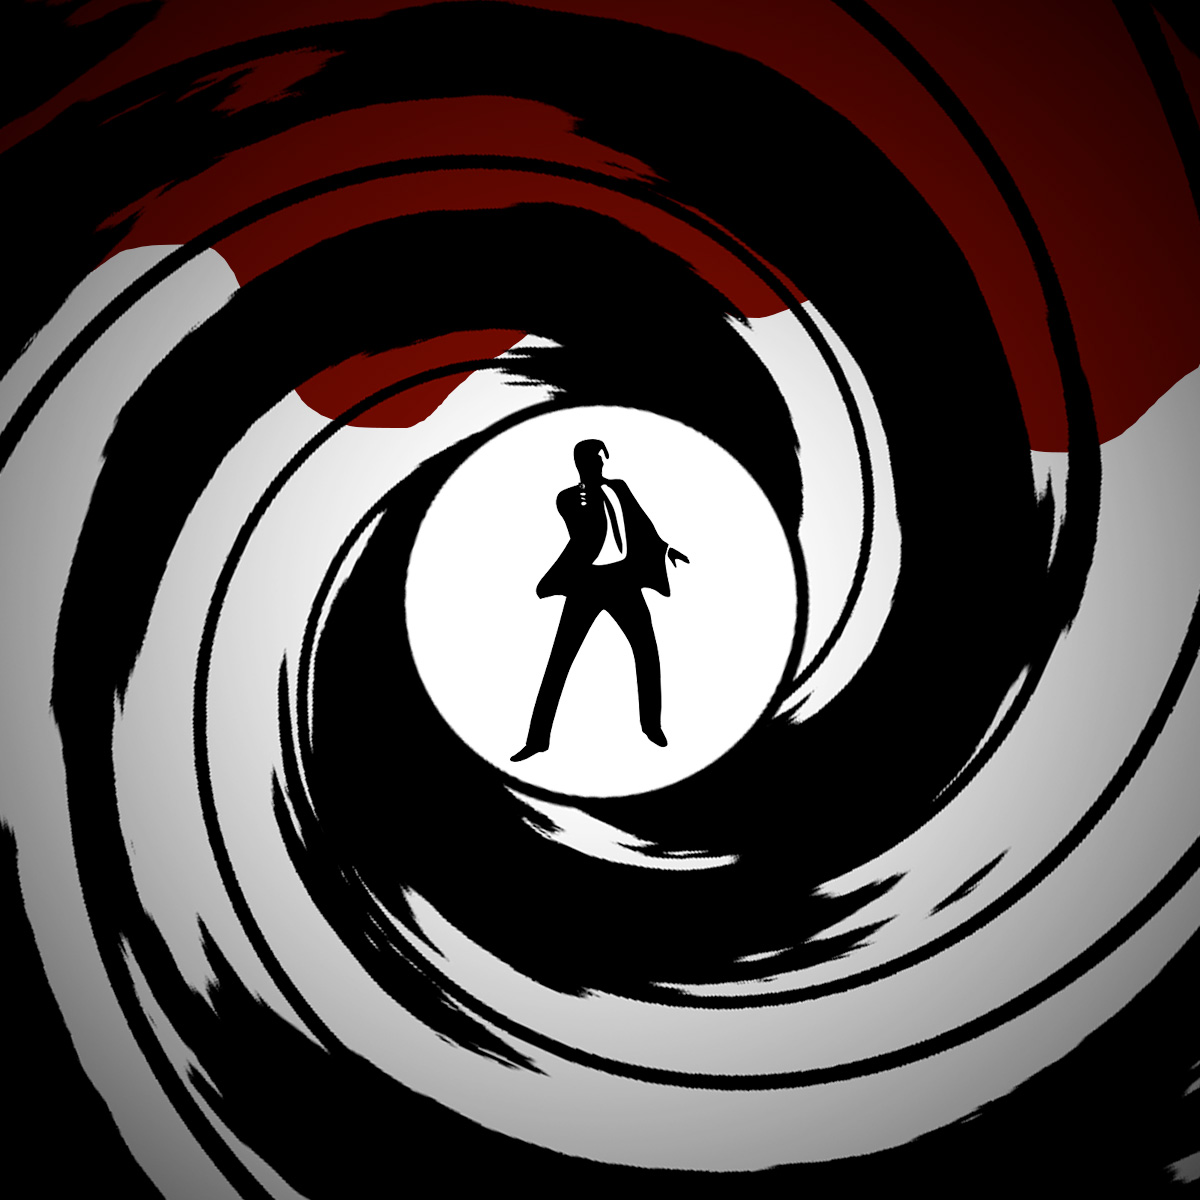 James Bond Gun Barrel Background Wallpaper Xps